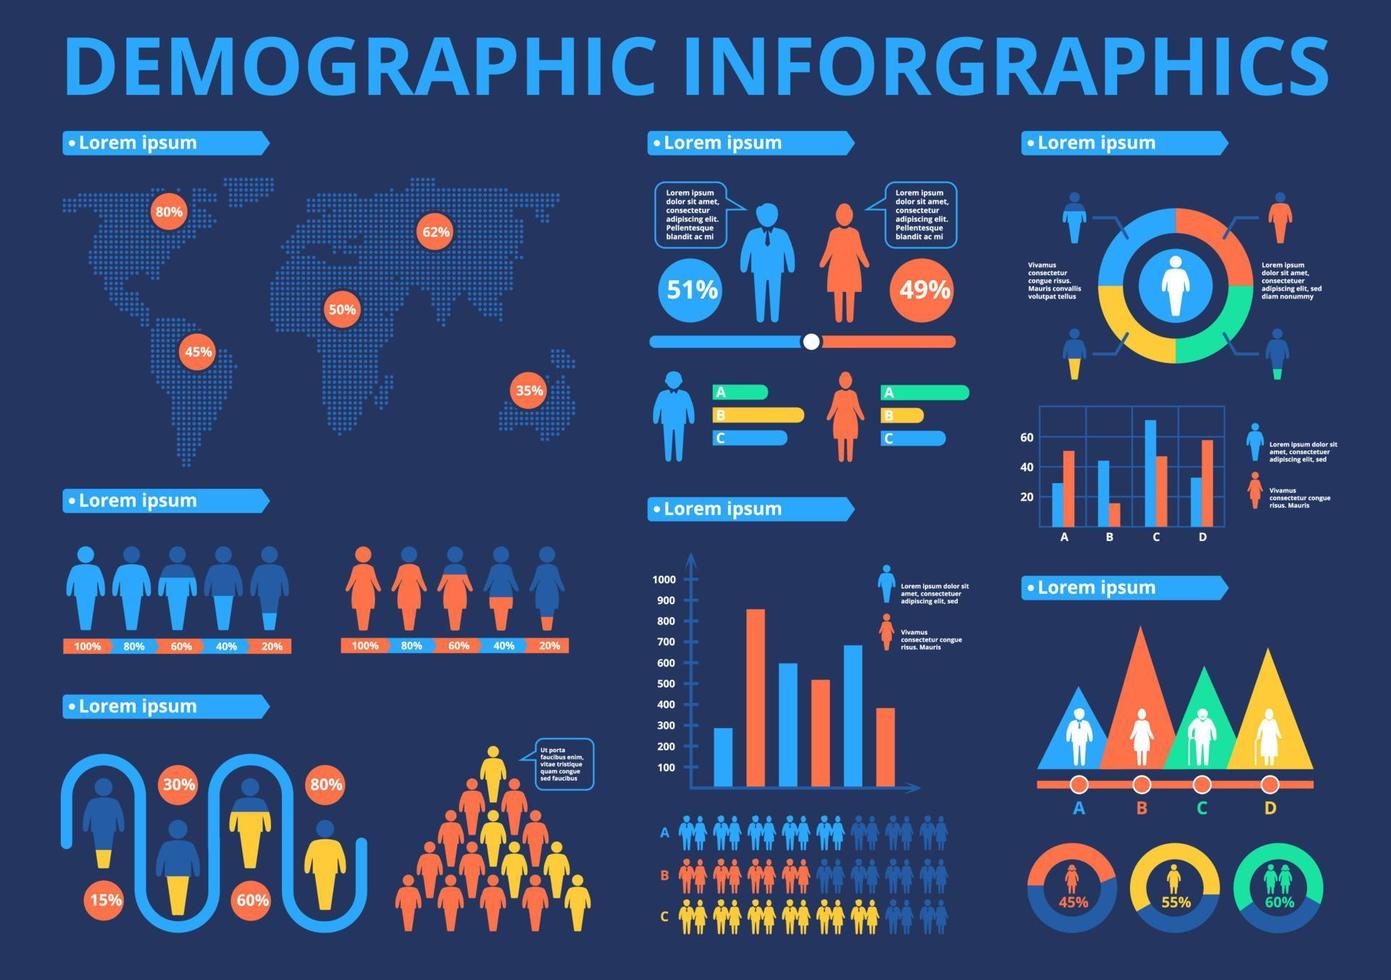 demografía infografía. mundo mapa población estadística con datos gráficos, gráficos, diagramas, personas iconos humano infografia vector folleto